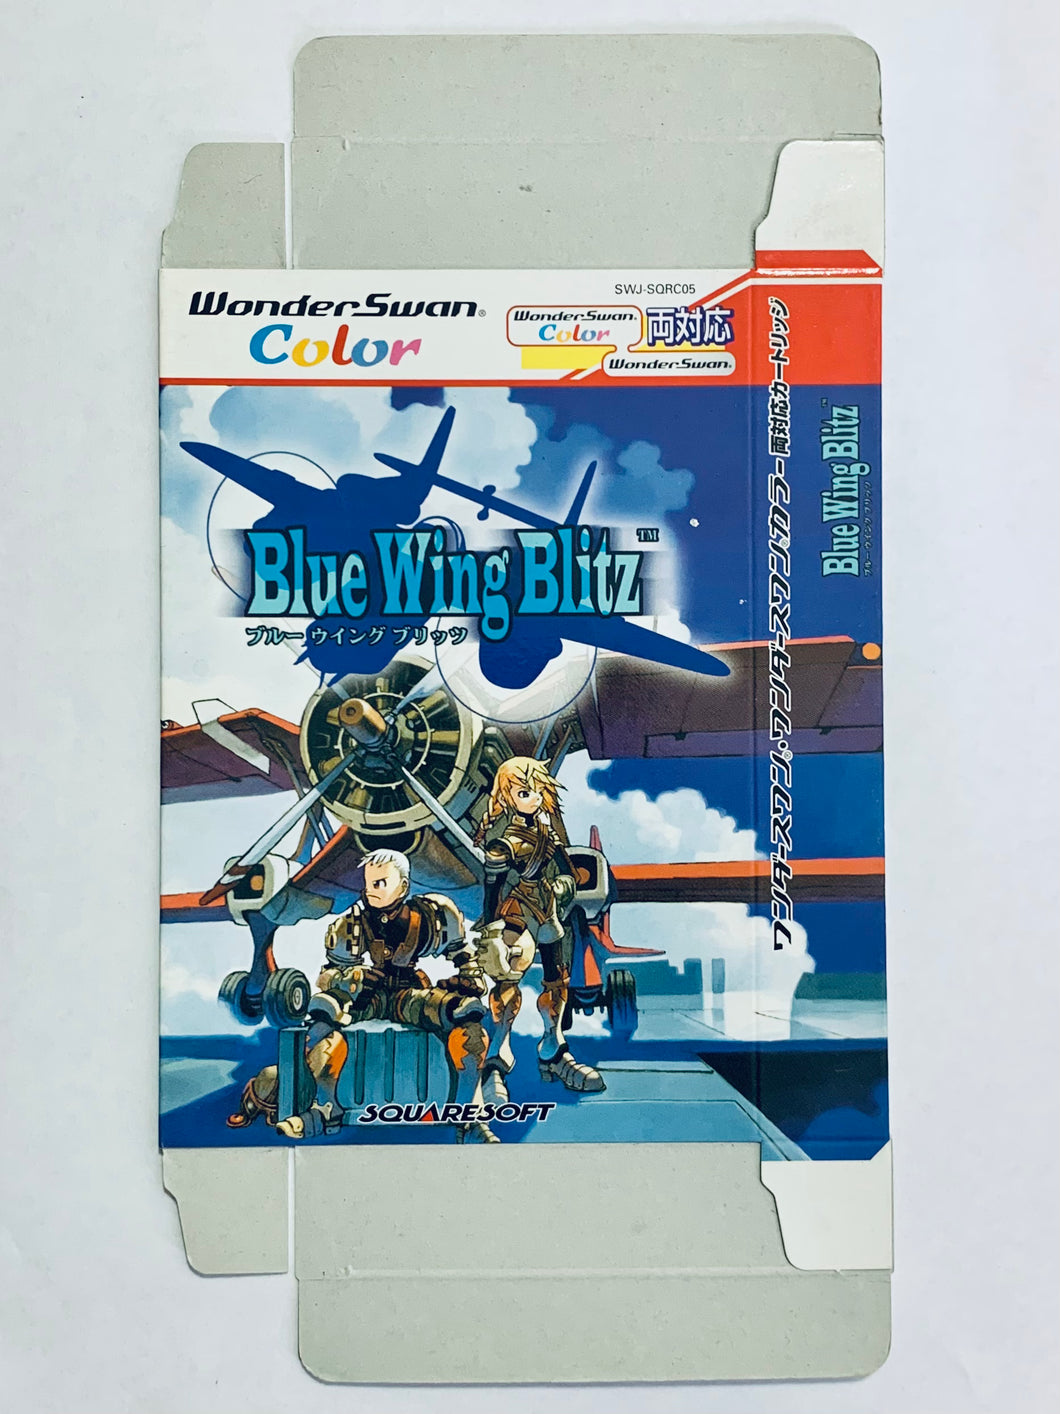 Blue Wing Blitz - WonderSwan Color - WSC - JP - Box Only (SWJ-SQRC05)